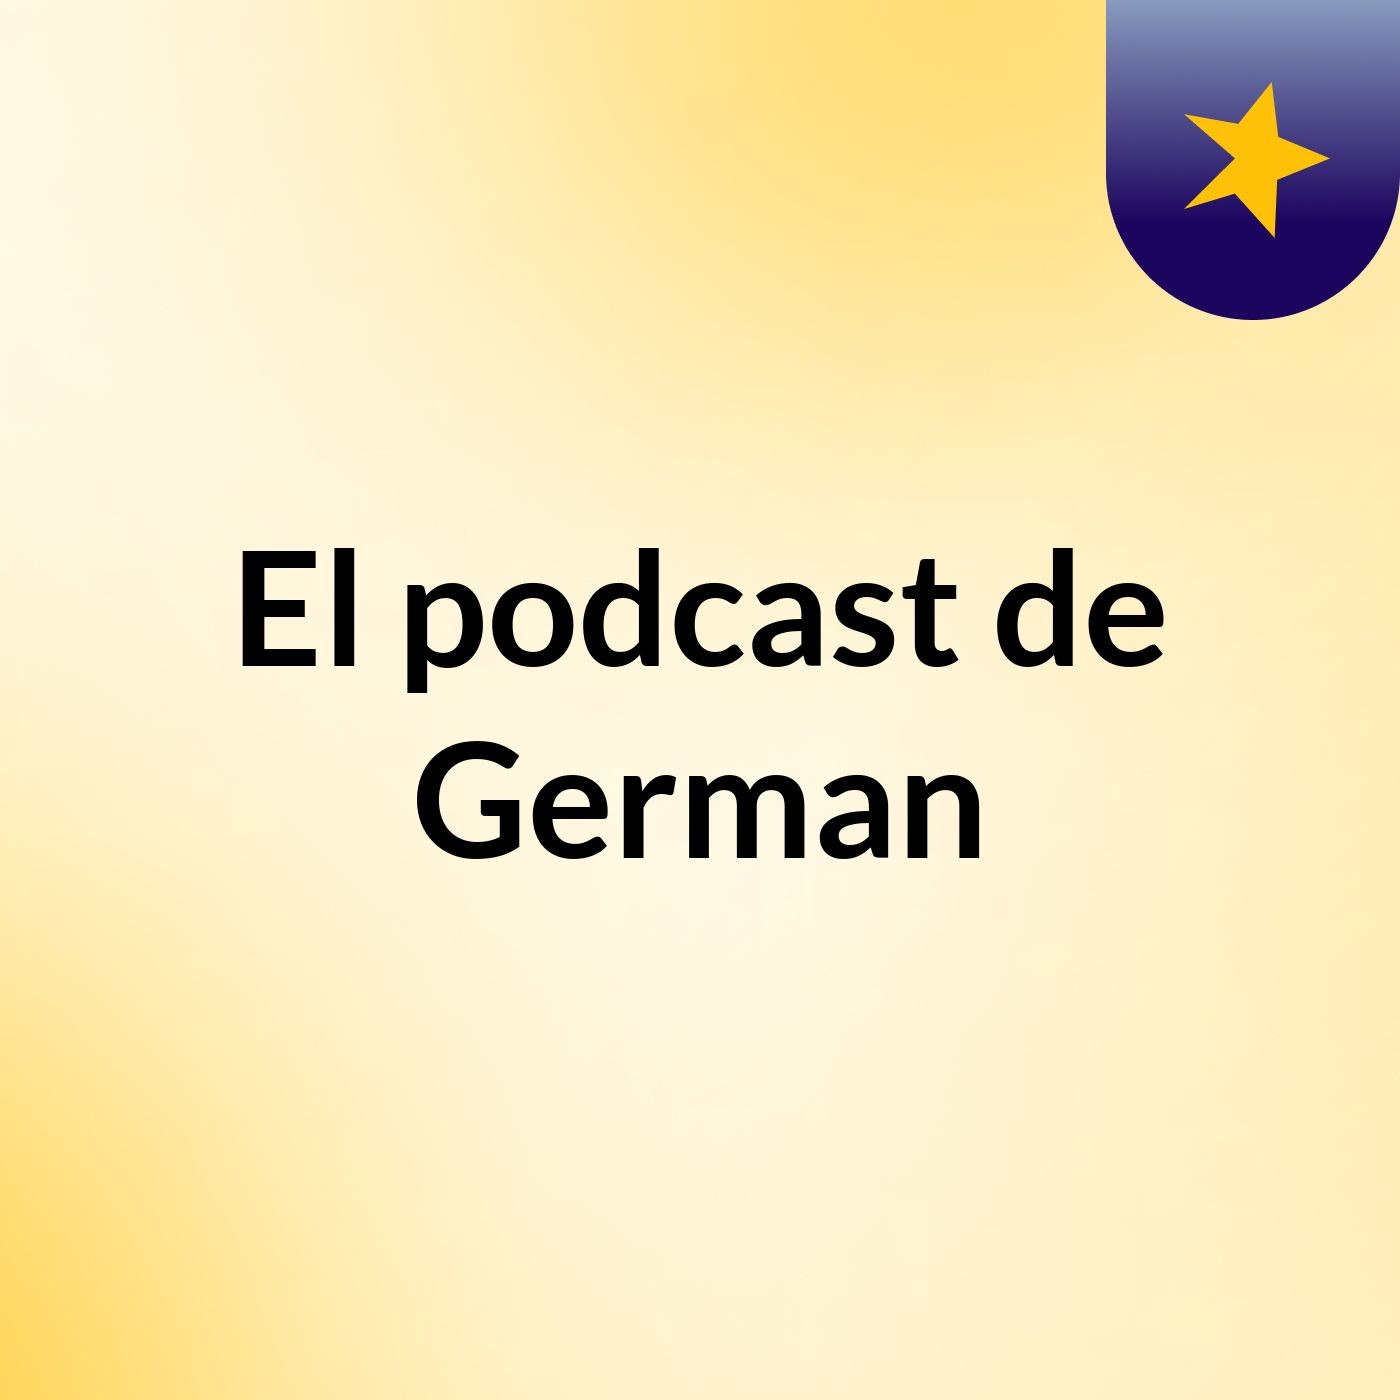 El podcast de German